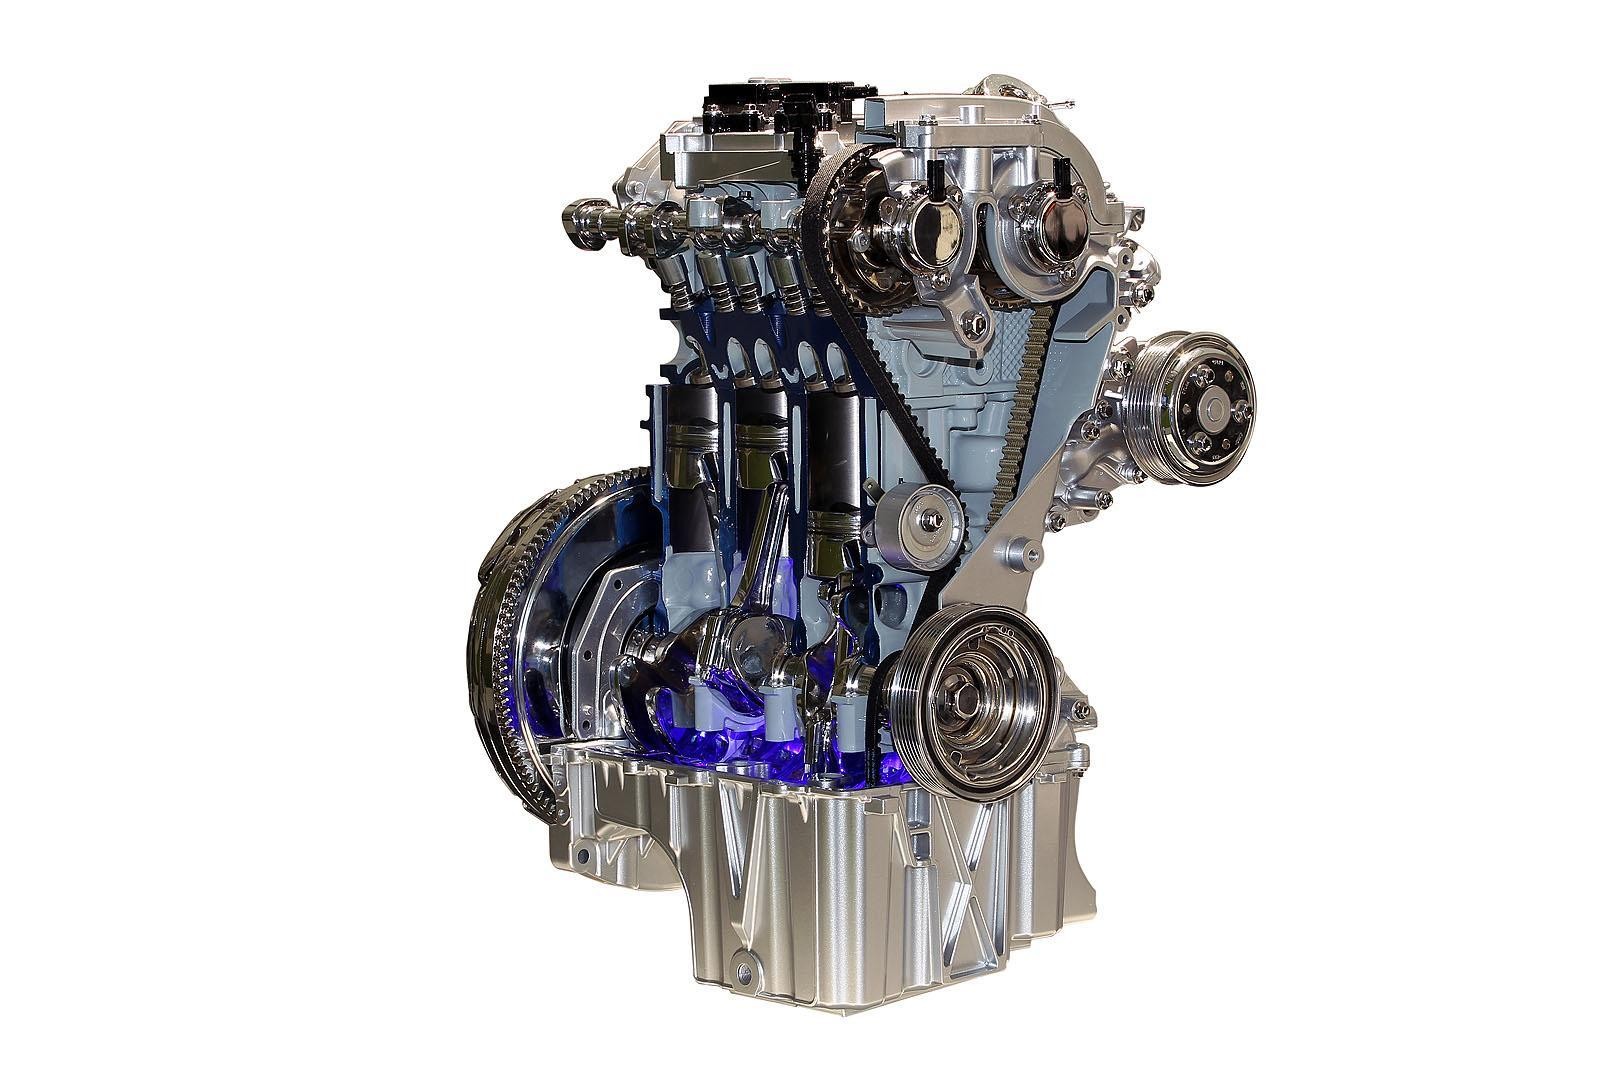 1.0L 이하 부문 1위, 2015 엔진 오브 더 이어 2위를 차지한 포드의 1.0L 에코부스트 엔진